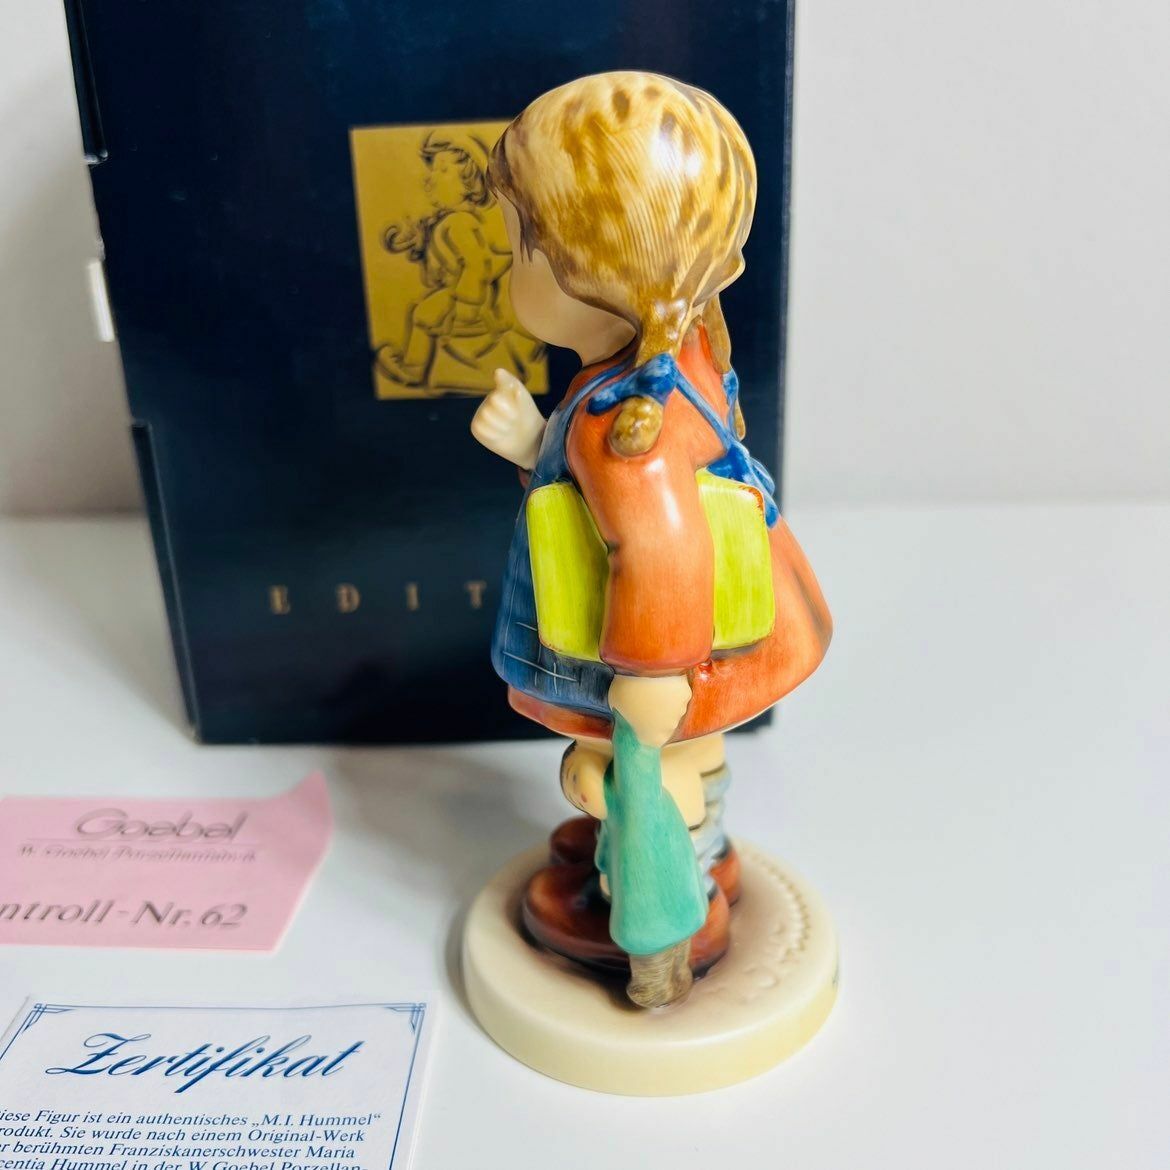 Goebel Hummel Girl Figurine I Wonder Books Learning School #486 German Sculpture